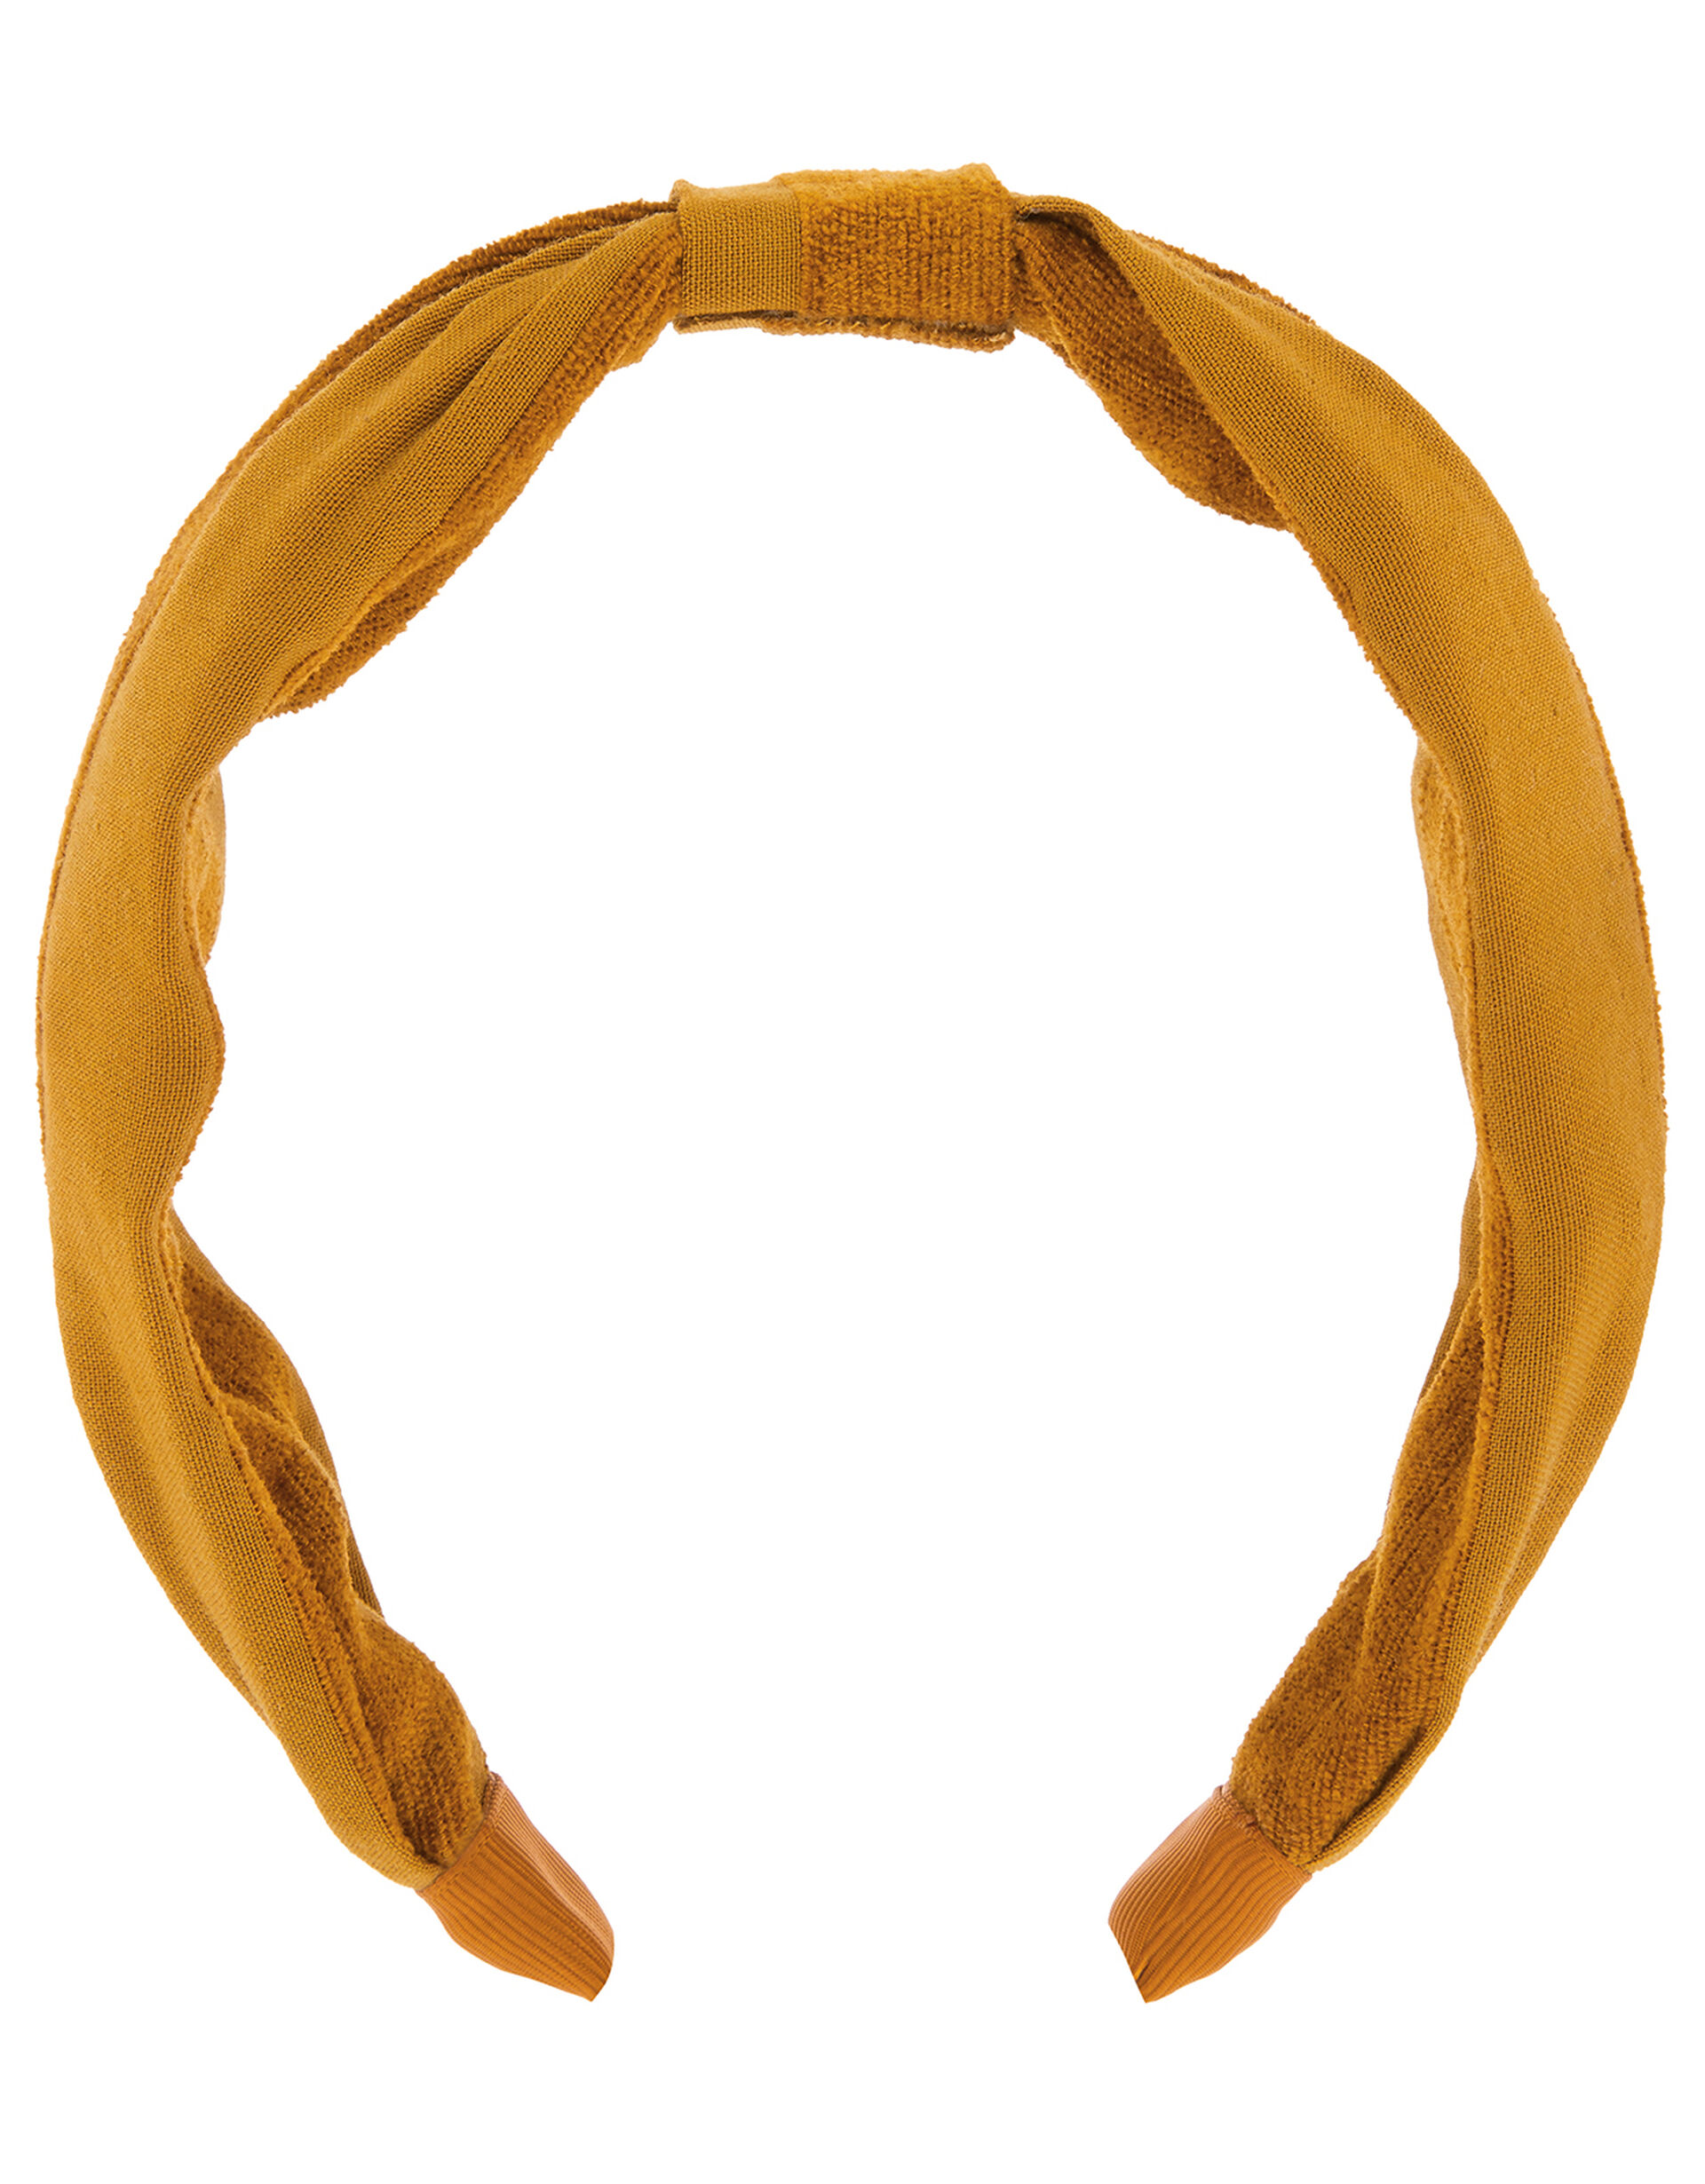 Wide Knot Headband, , large